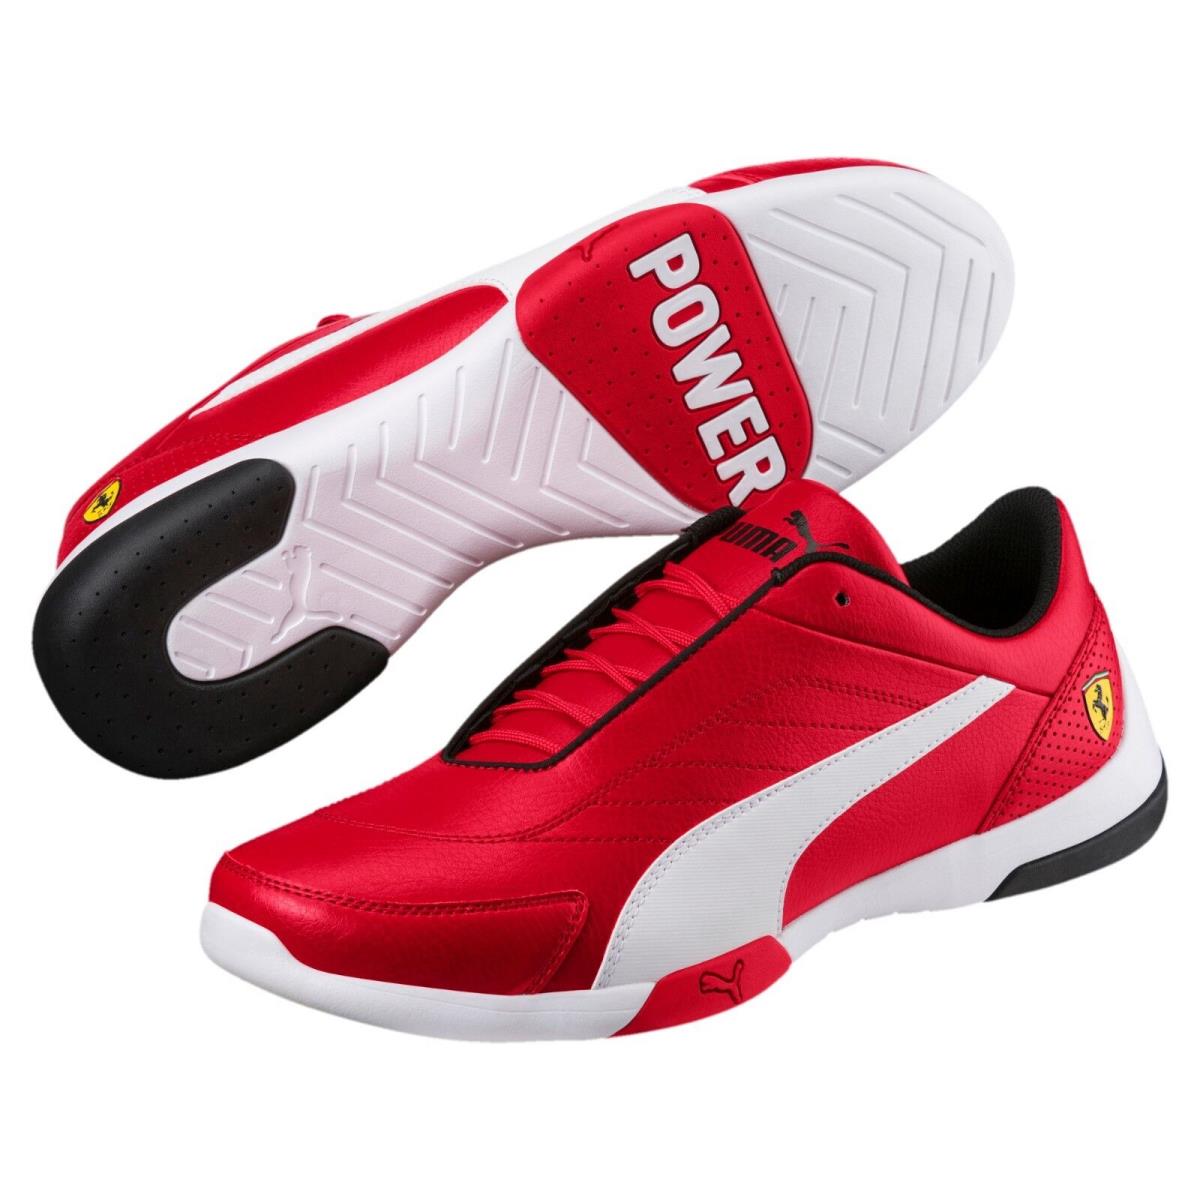 Mens Puma Ferrari Kart Cat Iii Sneakers Shoes Rosso Corsa Red 306219-01